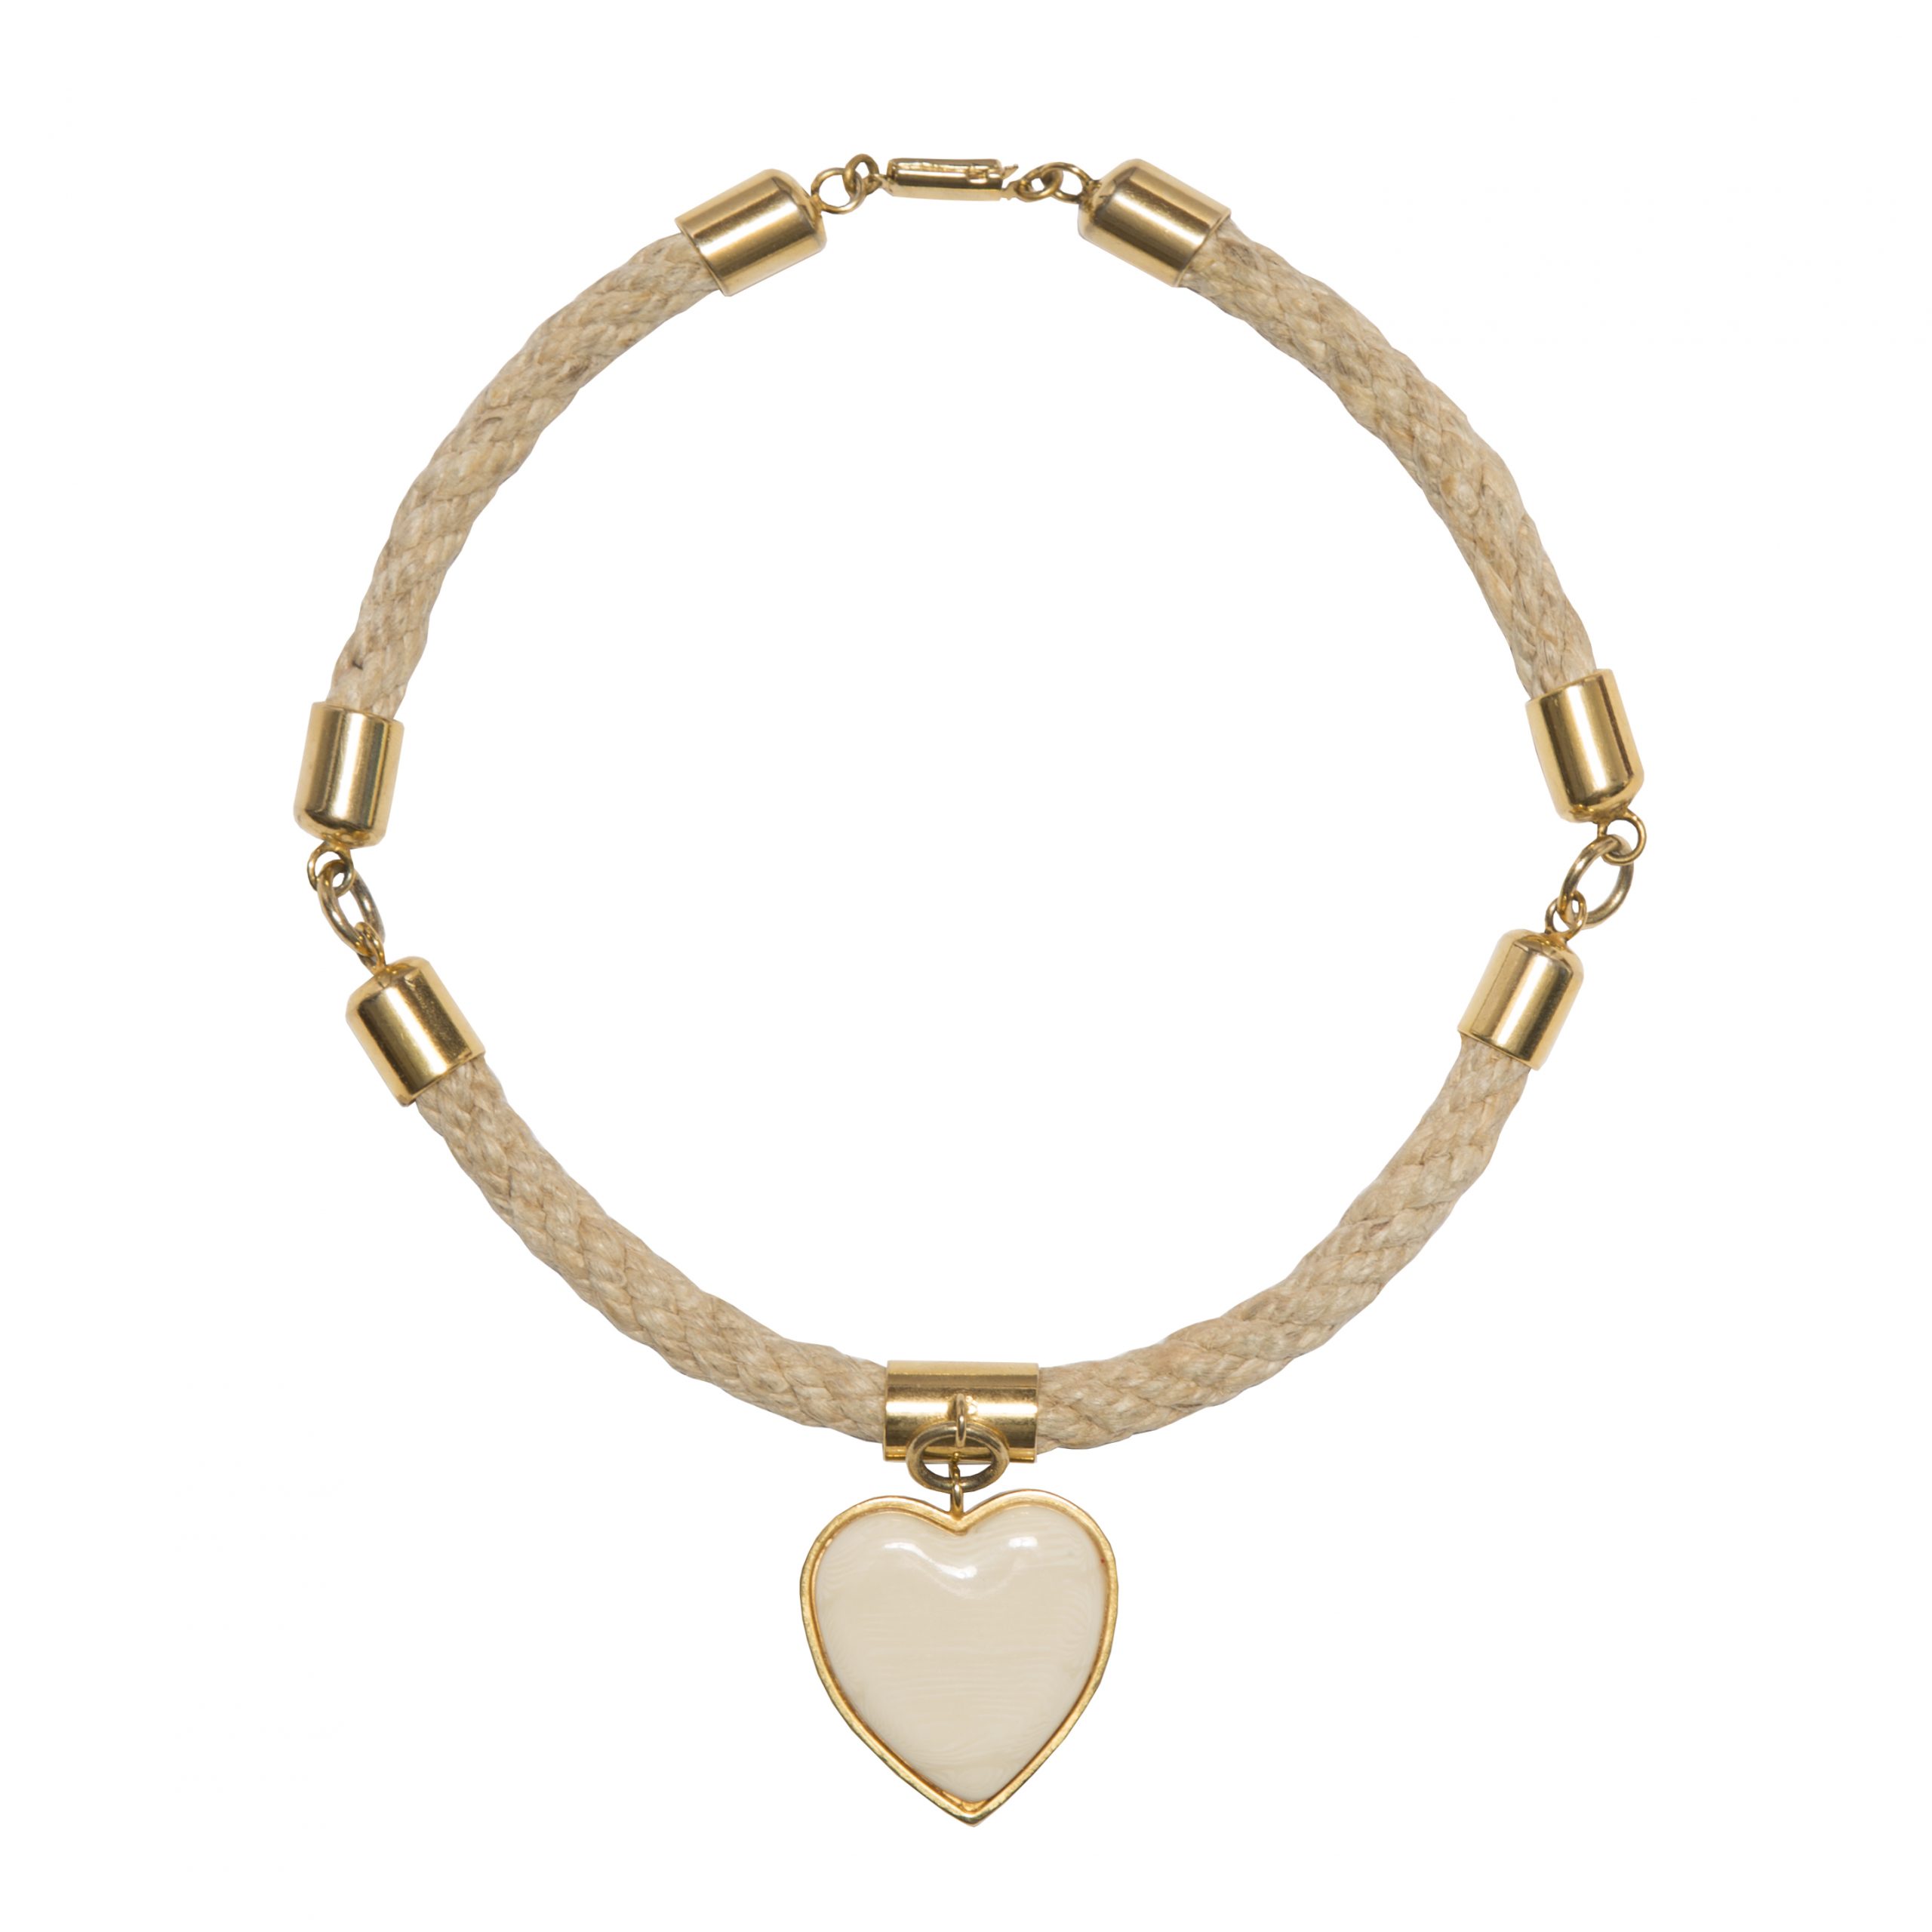 Vintage heart shape rope necklace